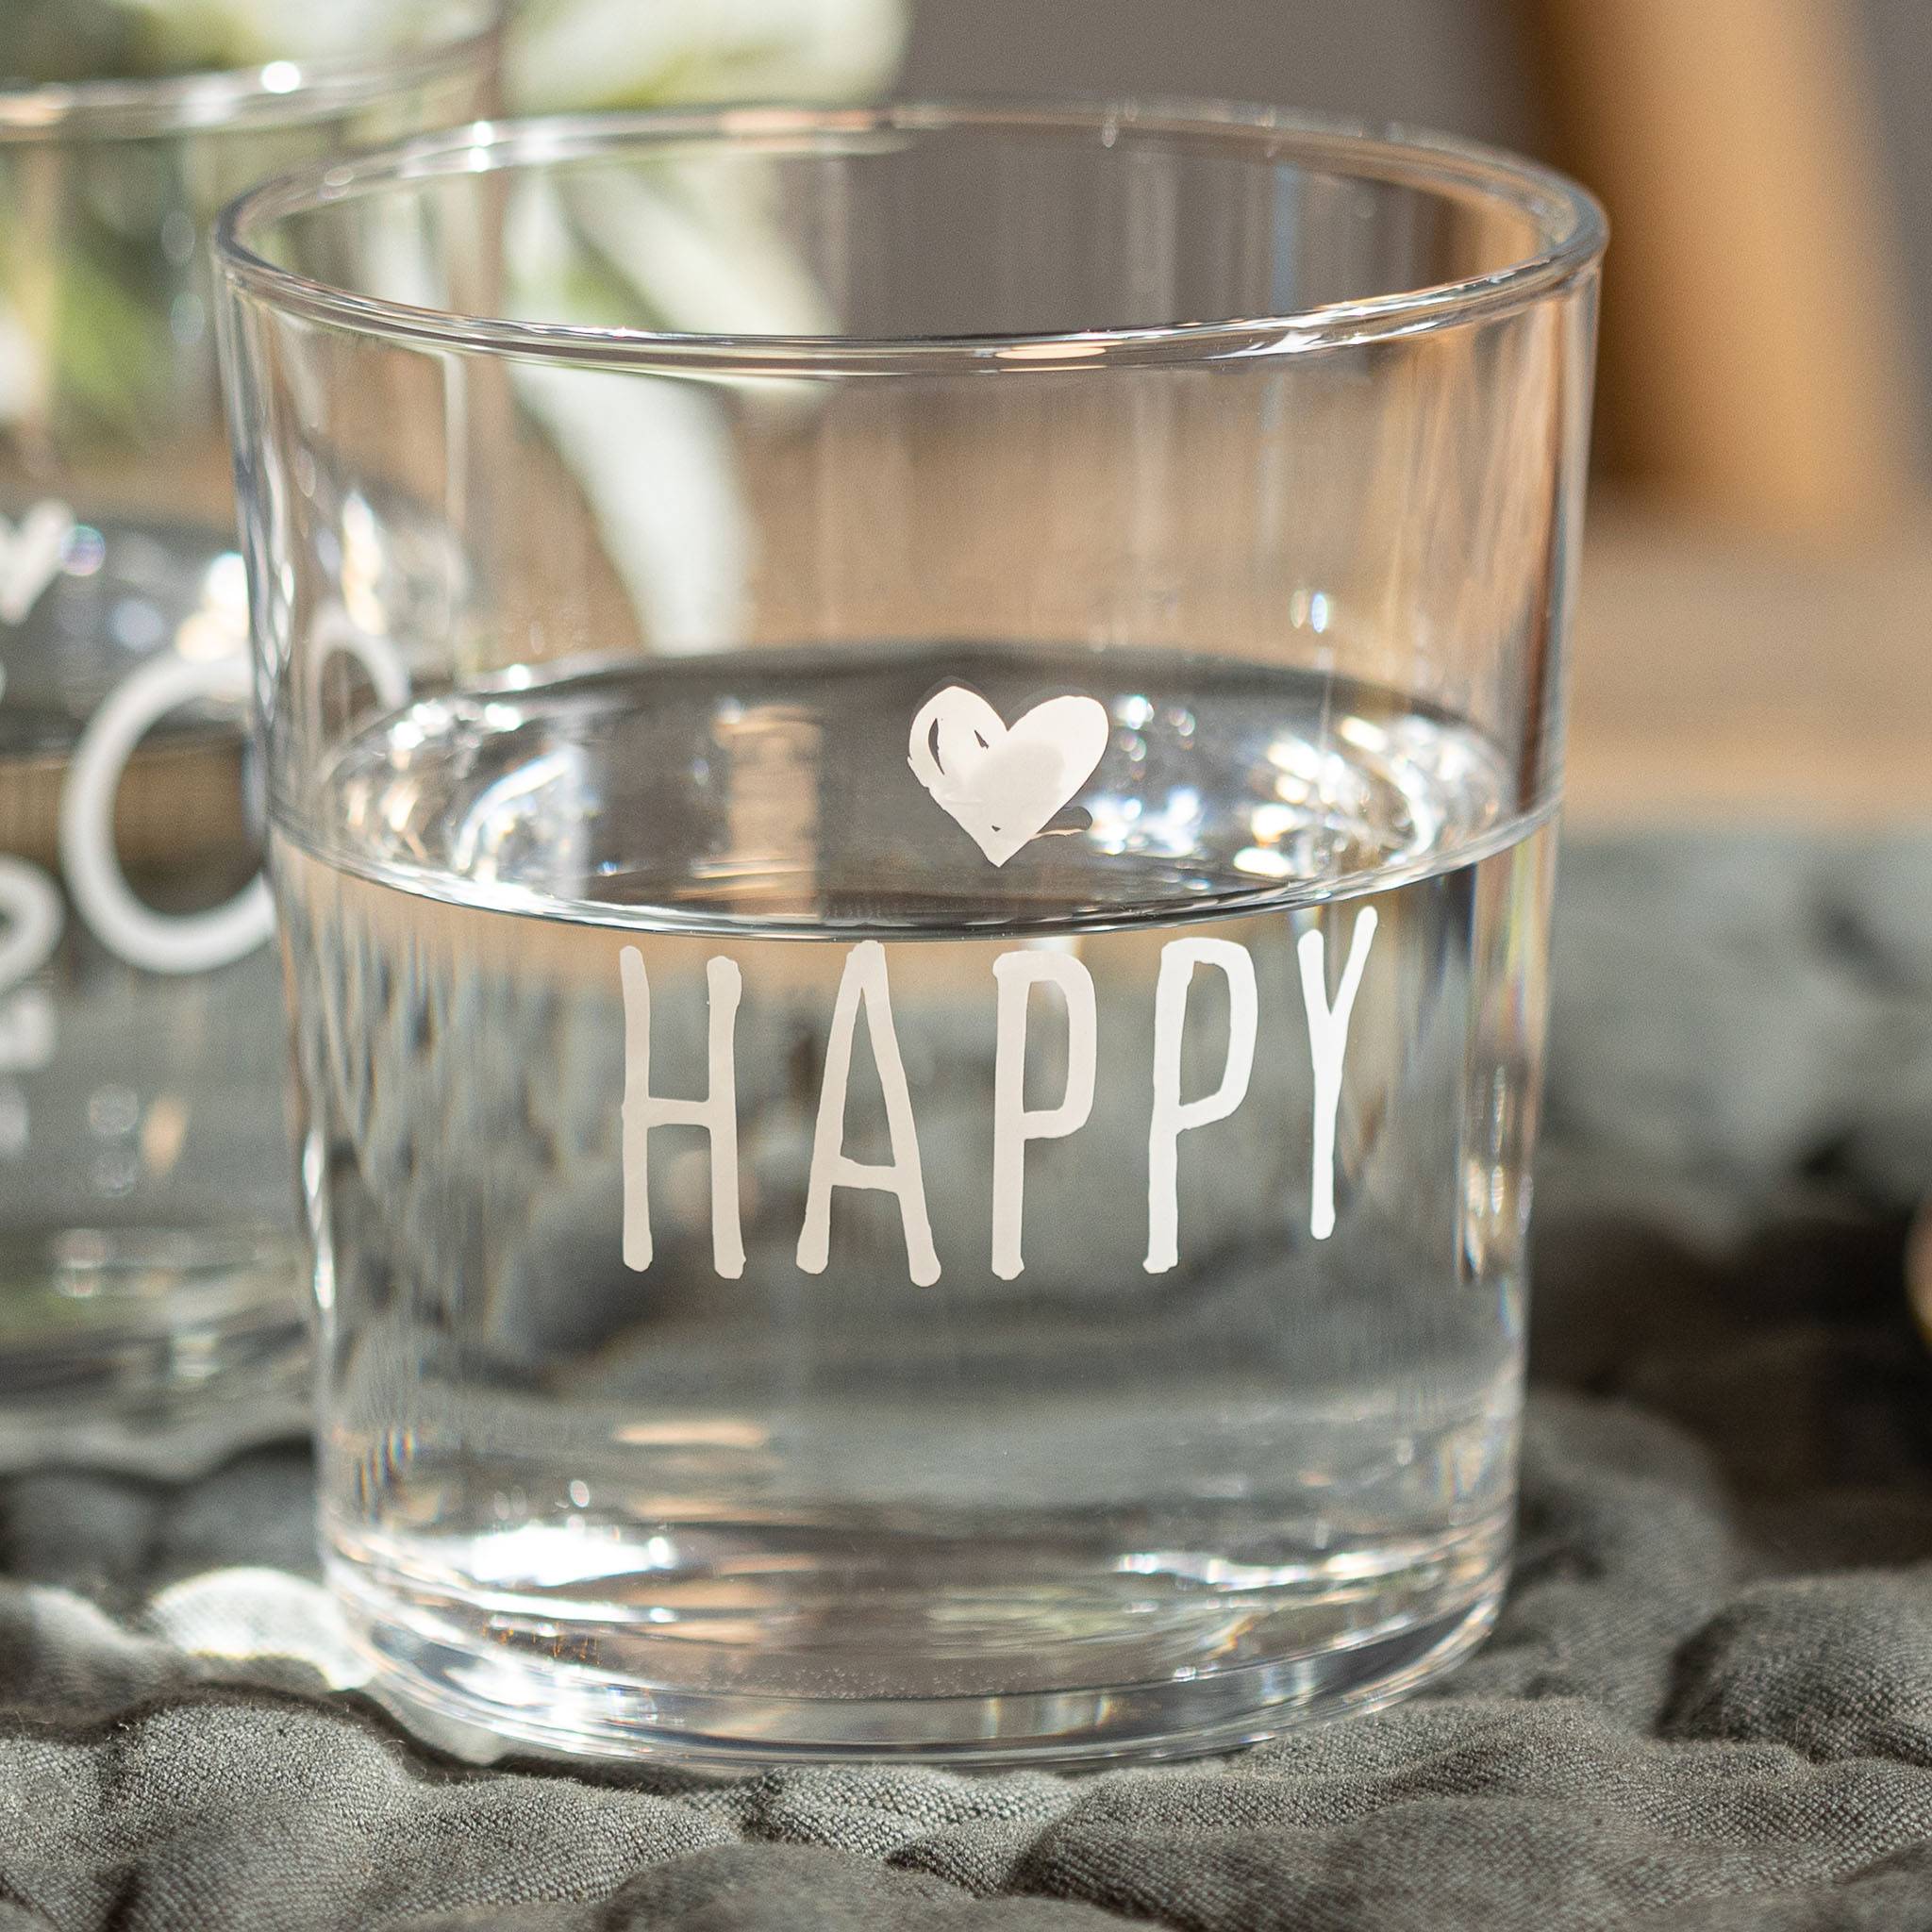 Set 6 Happy water glasses